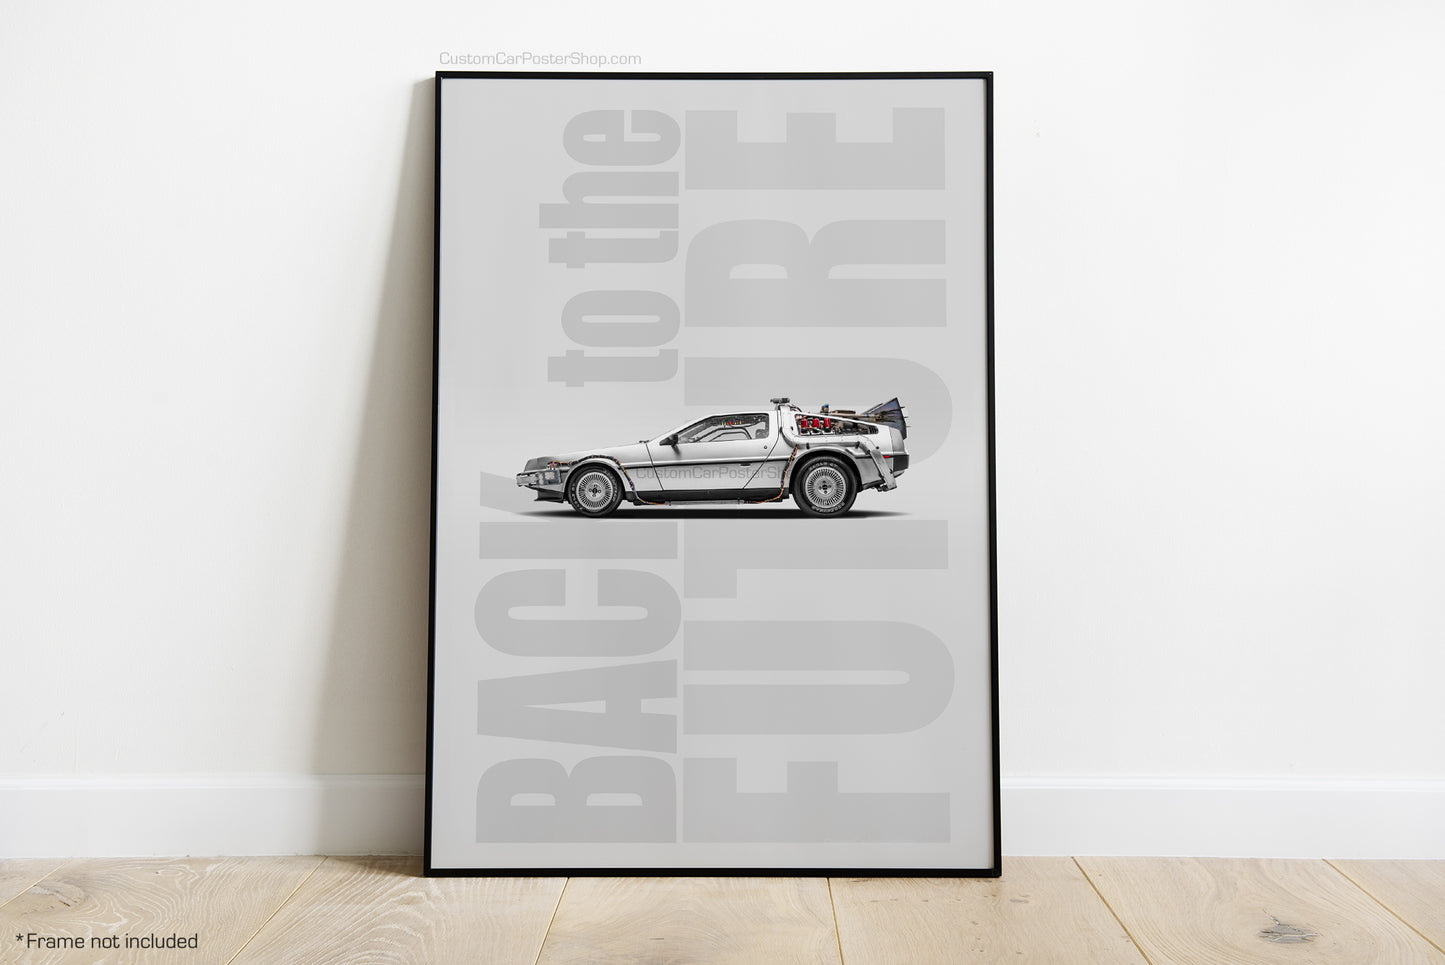 Back to the Future - DeLorean DMC-12 Time Machine Wall Art - Movie Cars